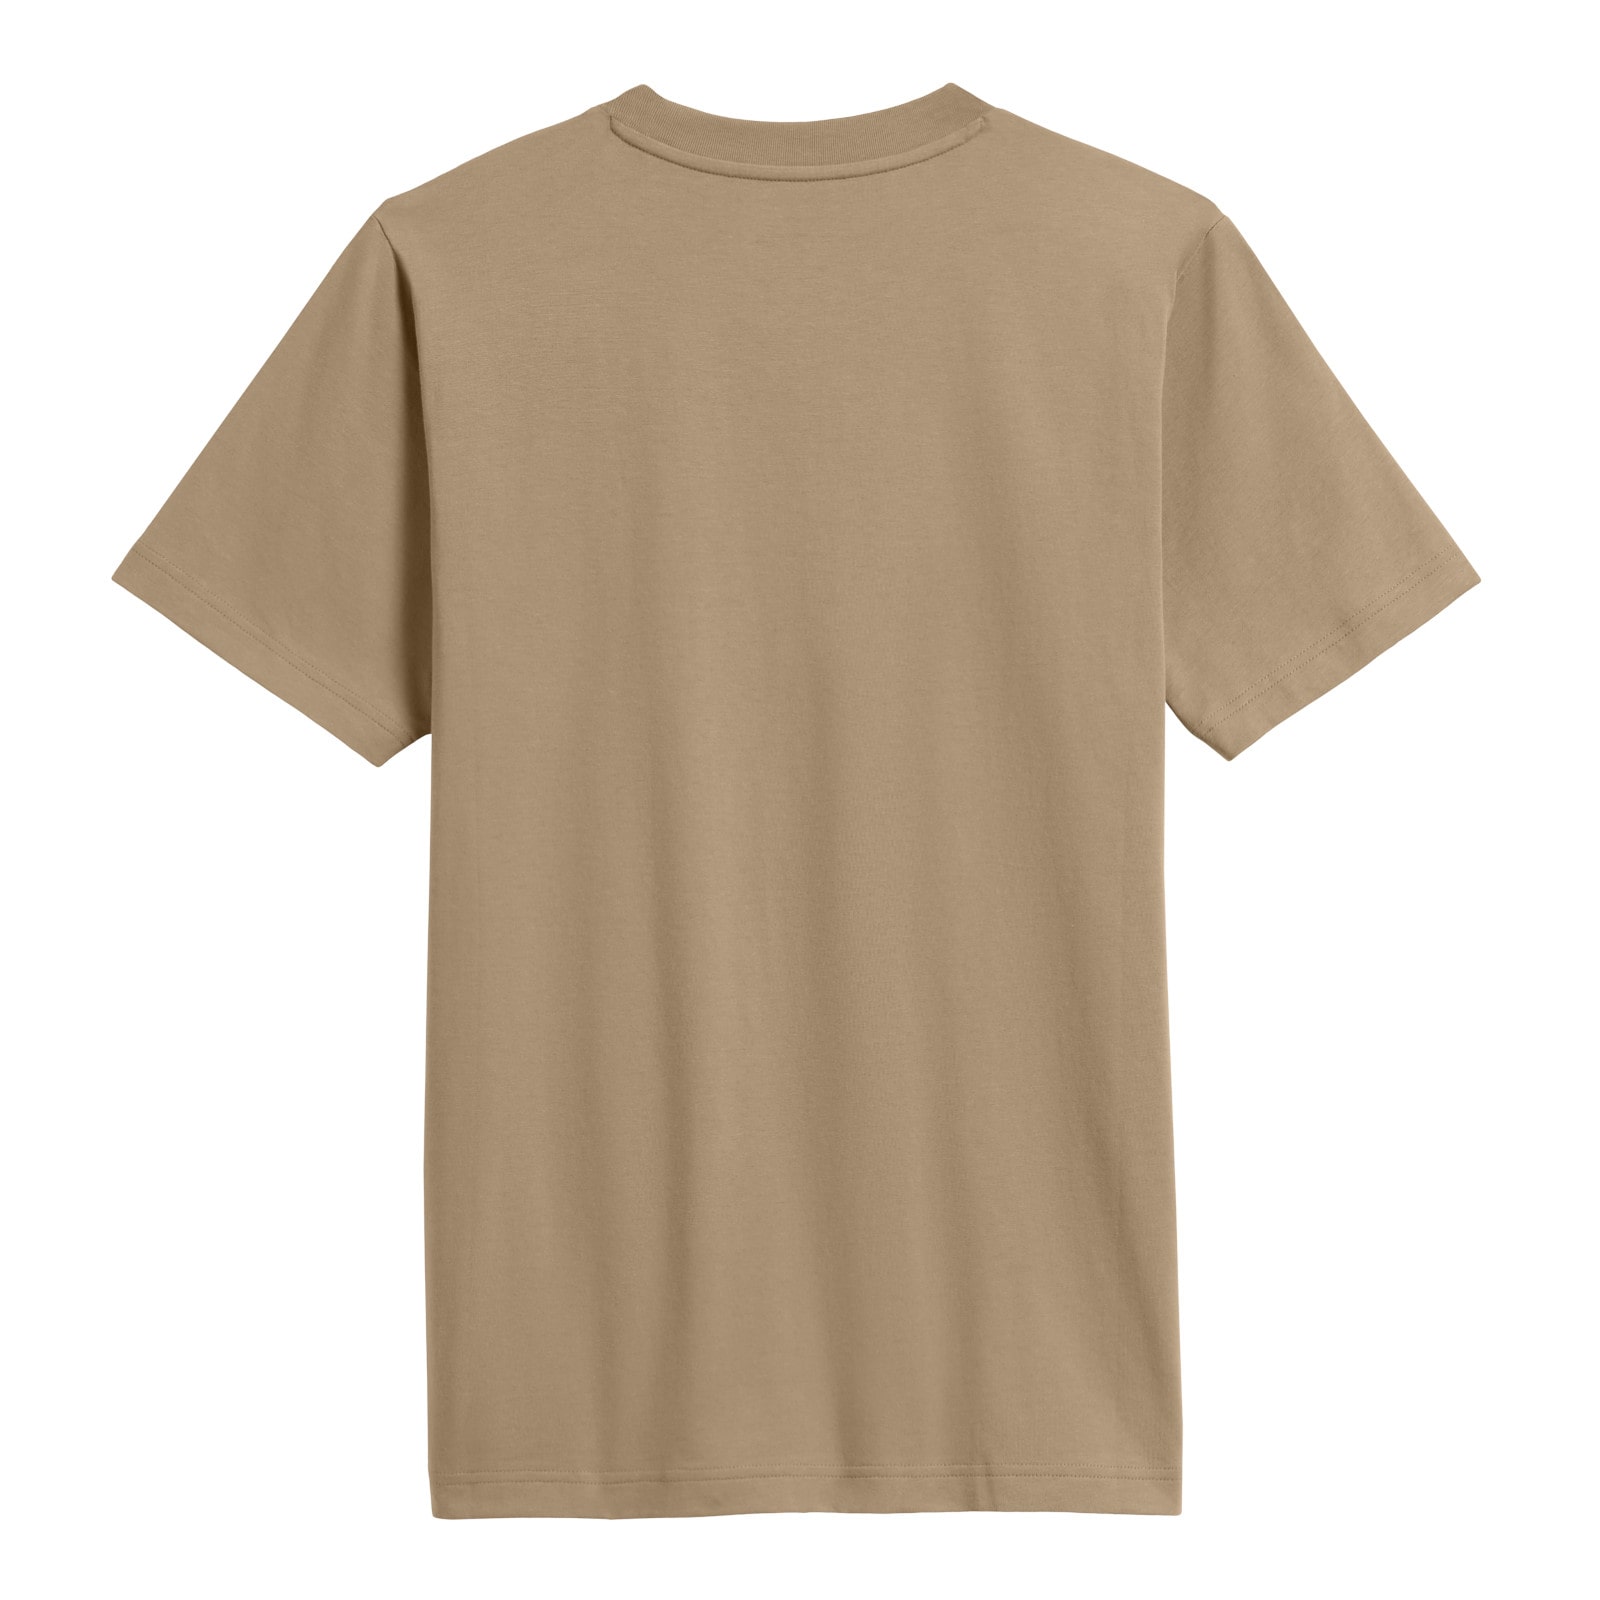 New Balance 610休闲短袖T恤